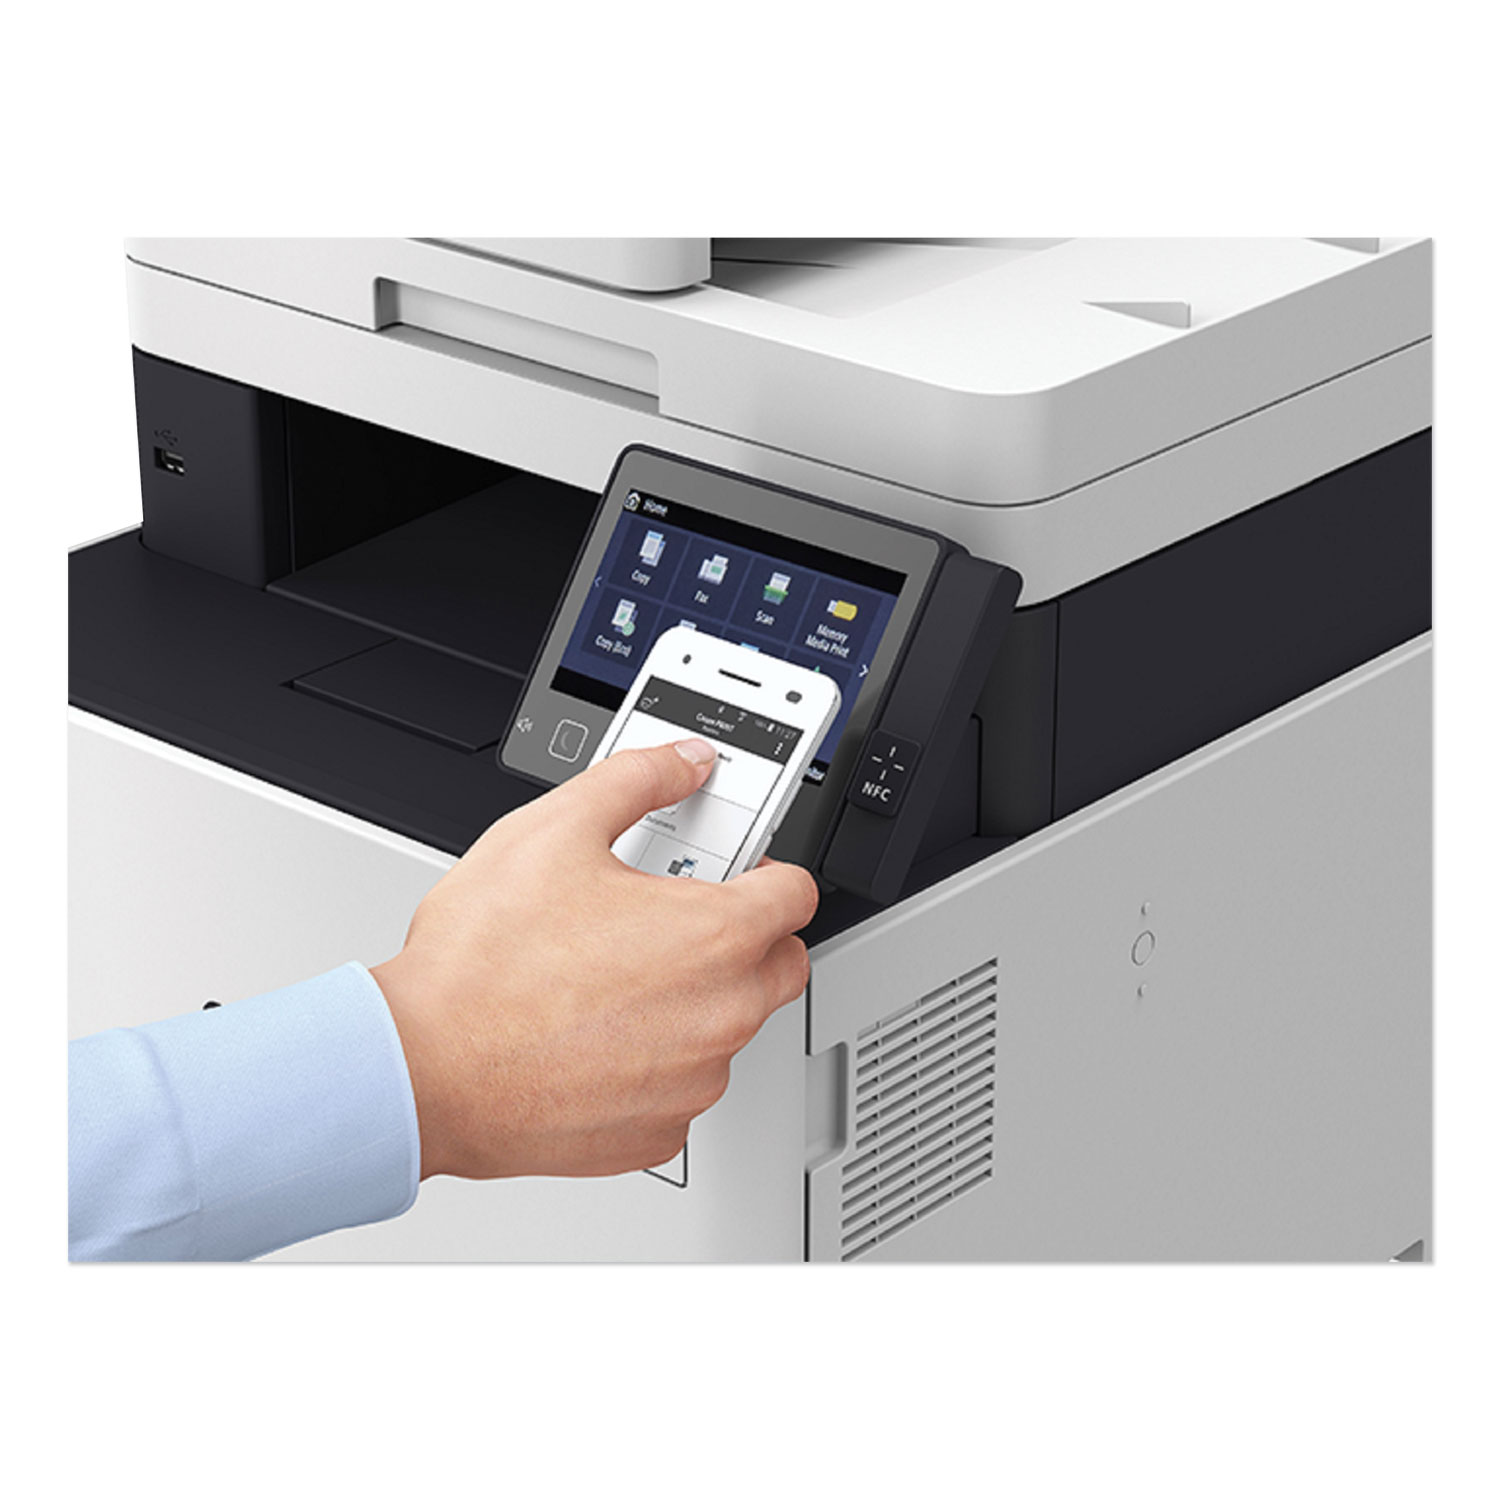 Color imageCLASS MF743Cdw Wireless Multifunction Laser Printer, Copy/Fax/Print/Scan